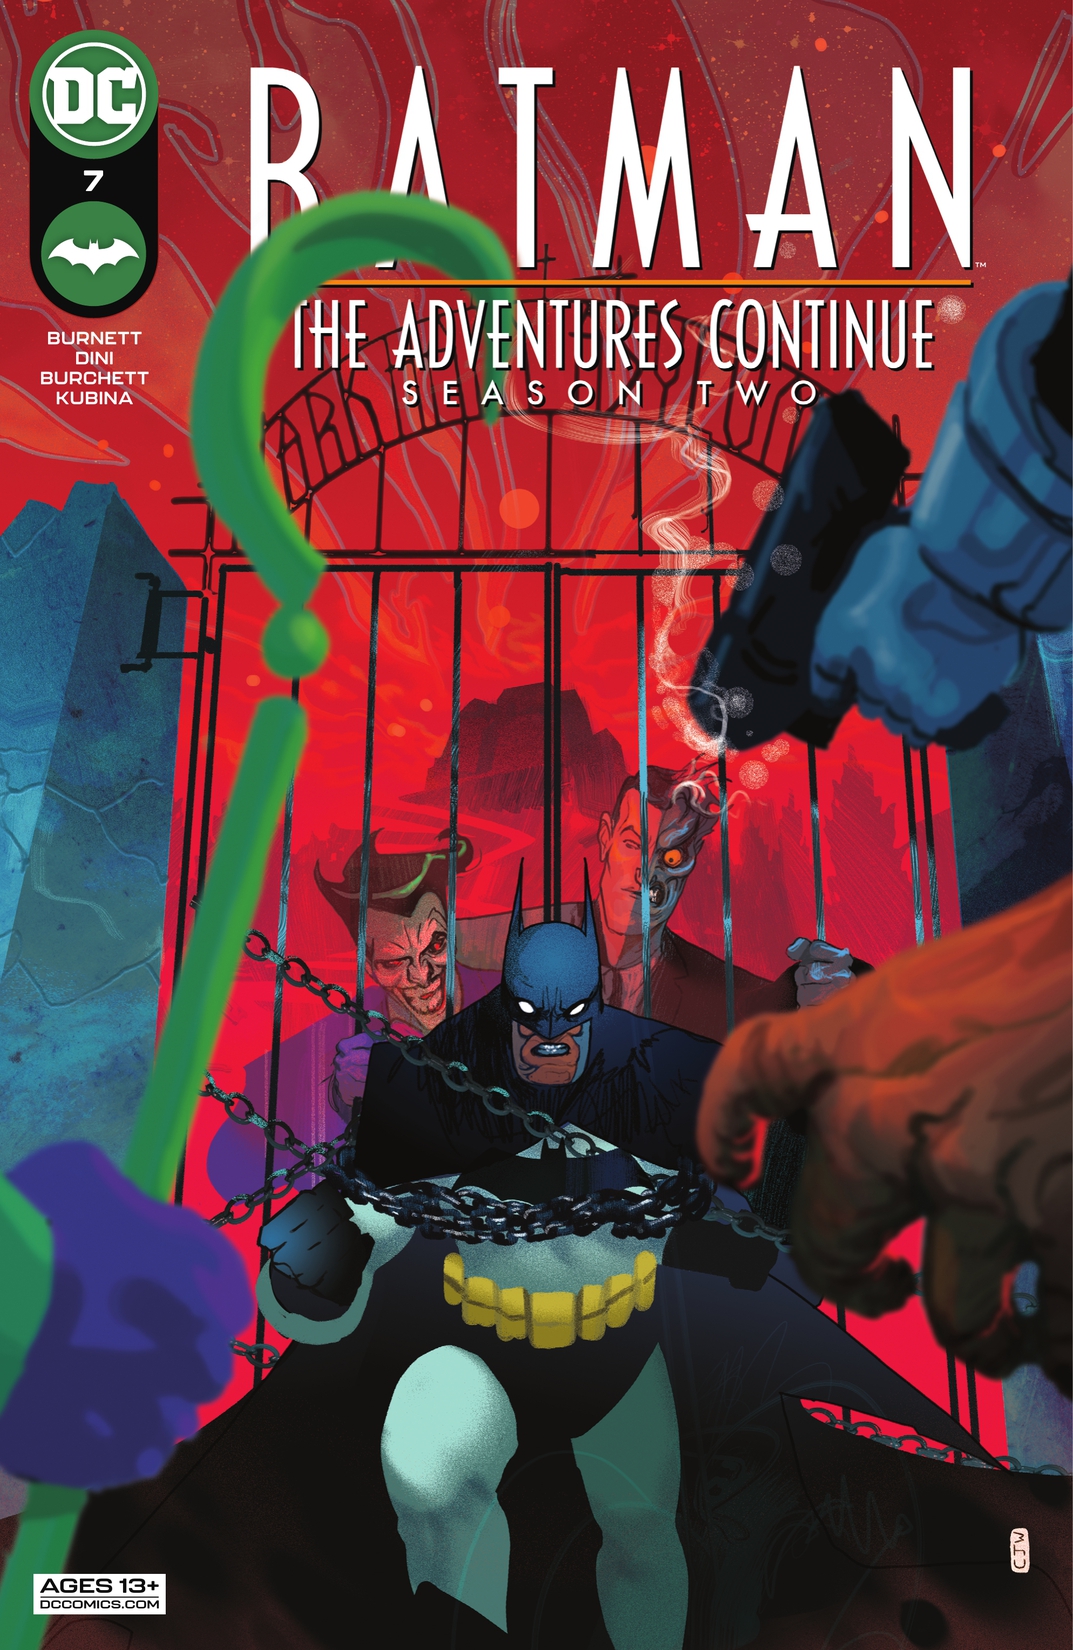 Batman: The Adventures Continue Season Two #7 preview images